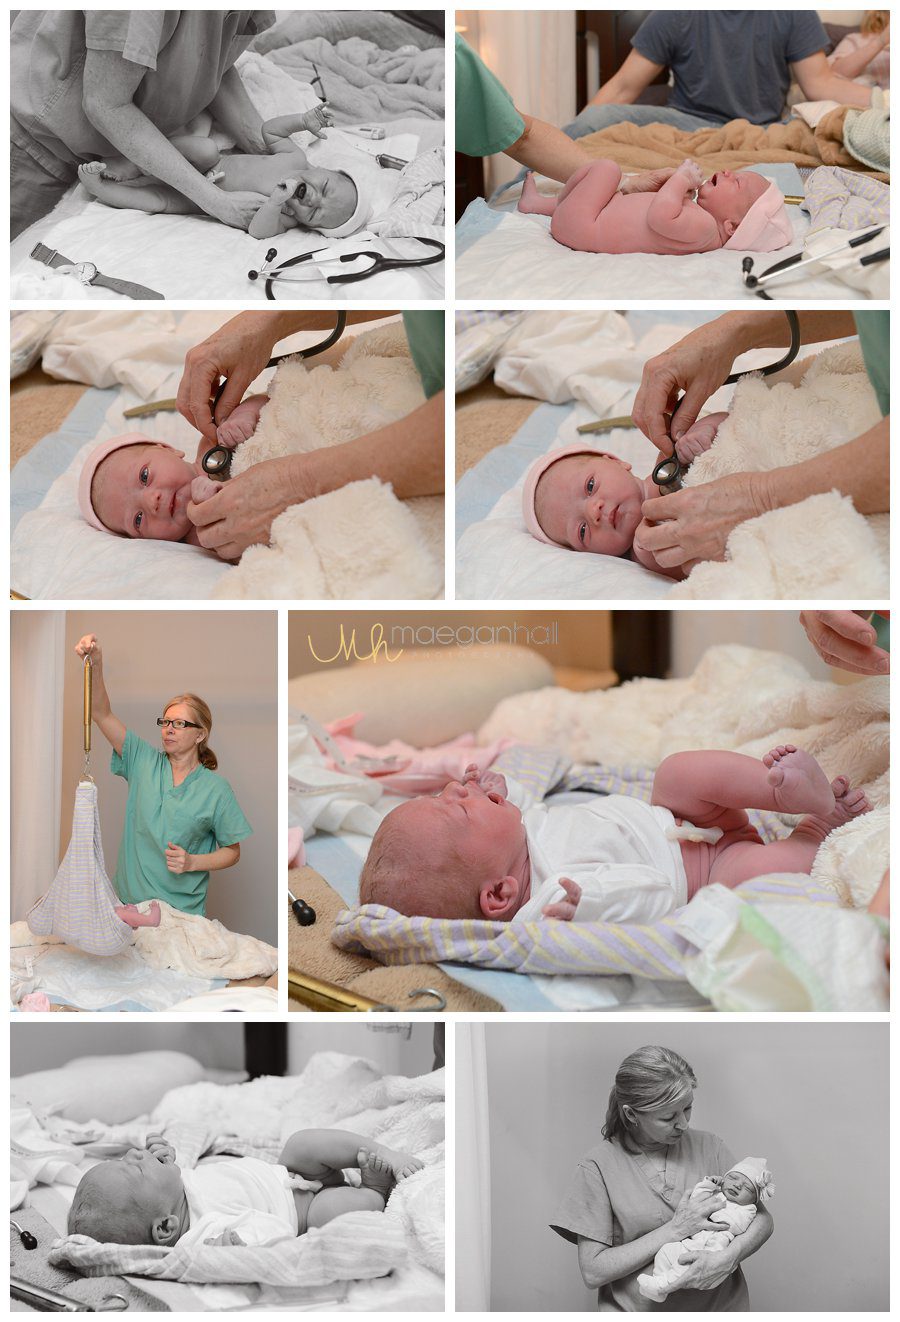 alpharetta-ga-home-water-birth-waterbirth-homebirth-midwife-doula-birth-photographer-photos-images-_0380